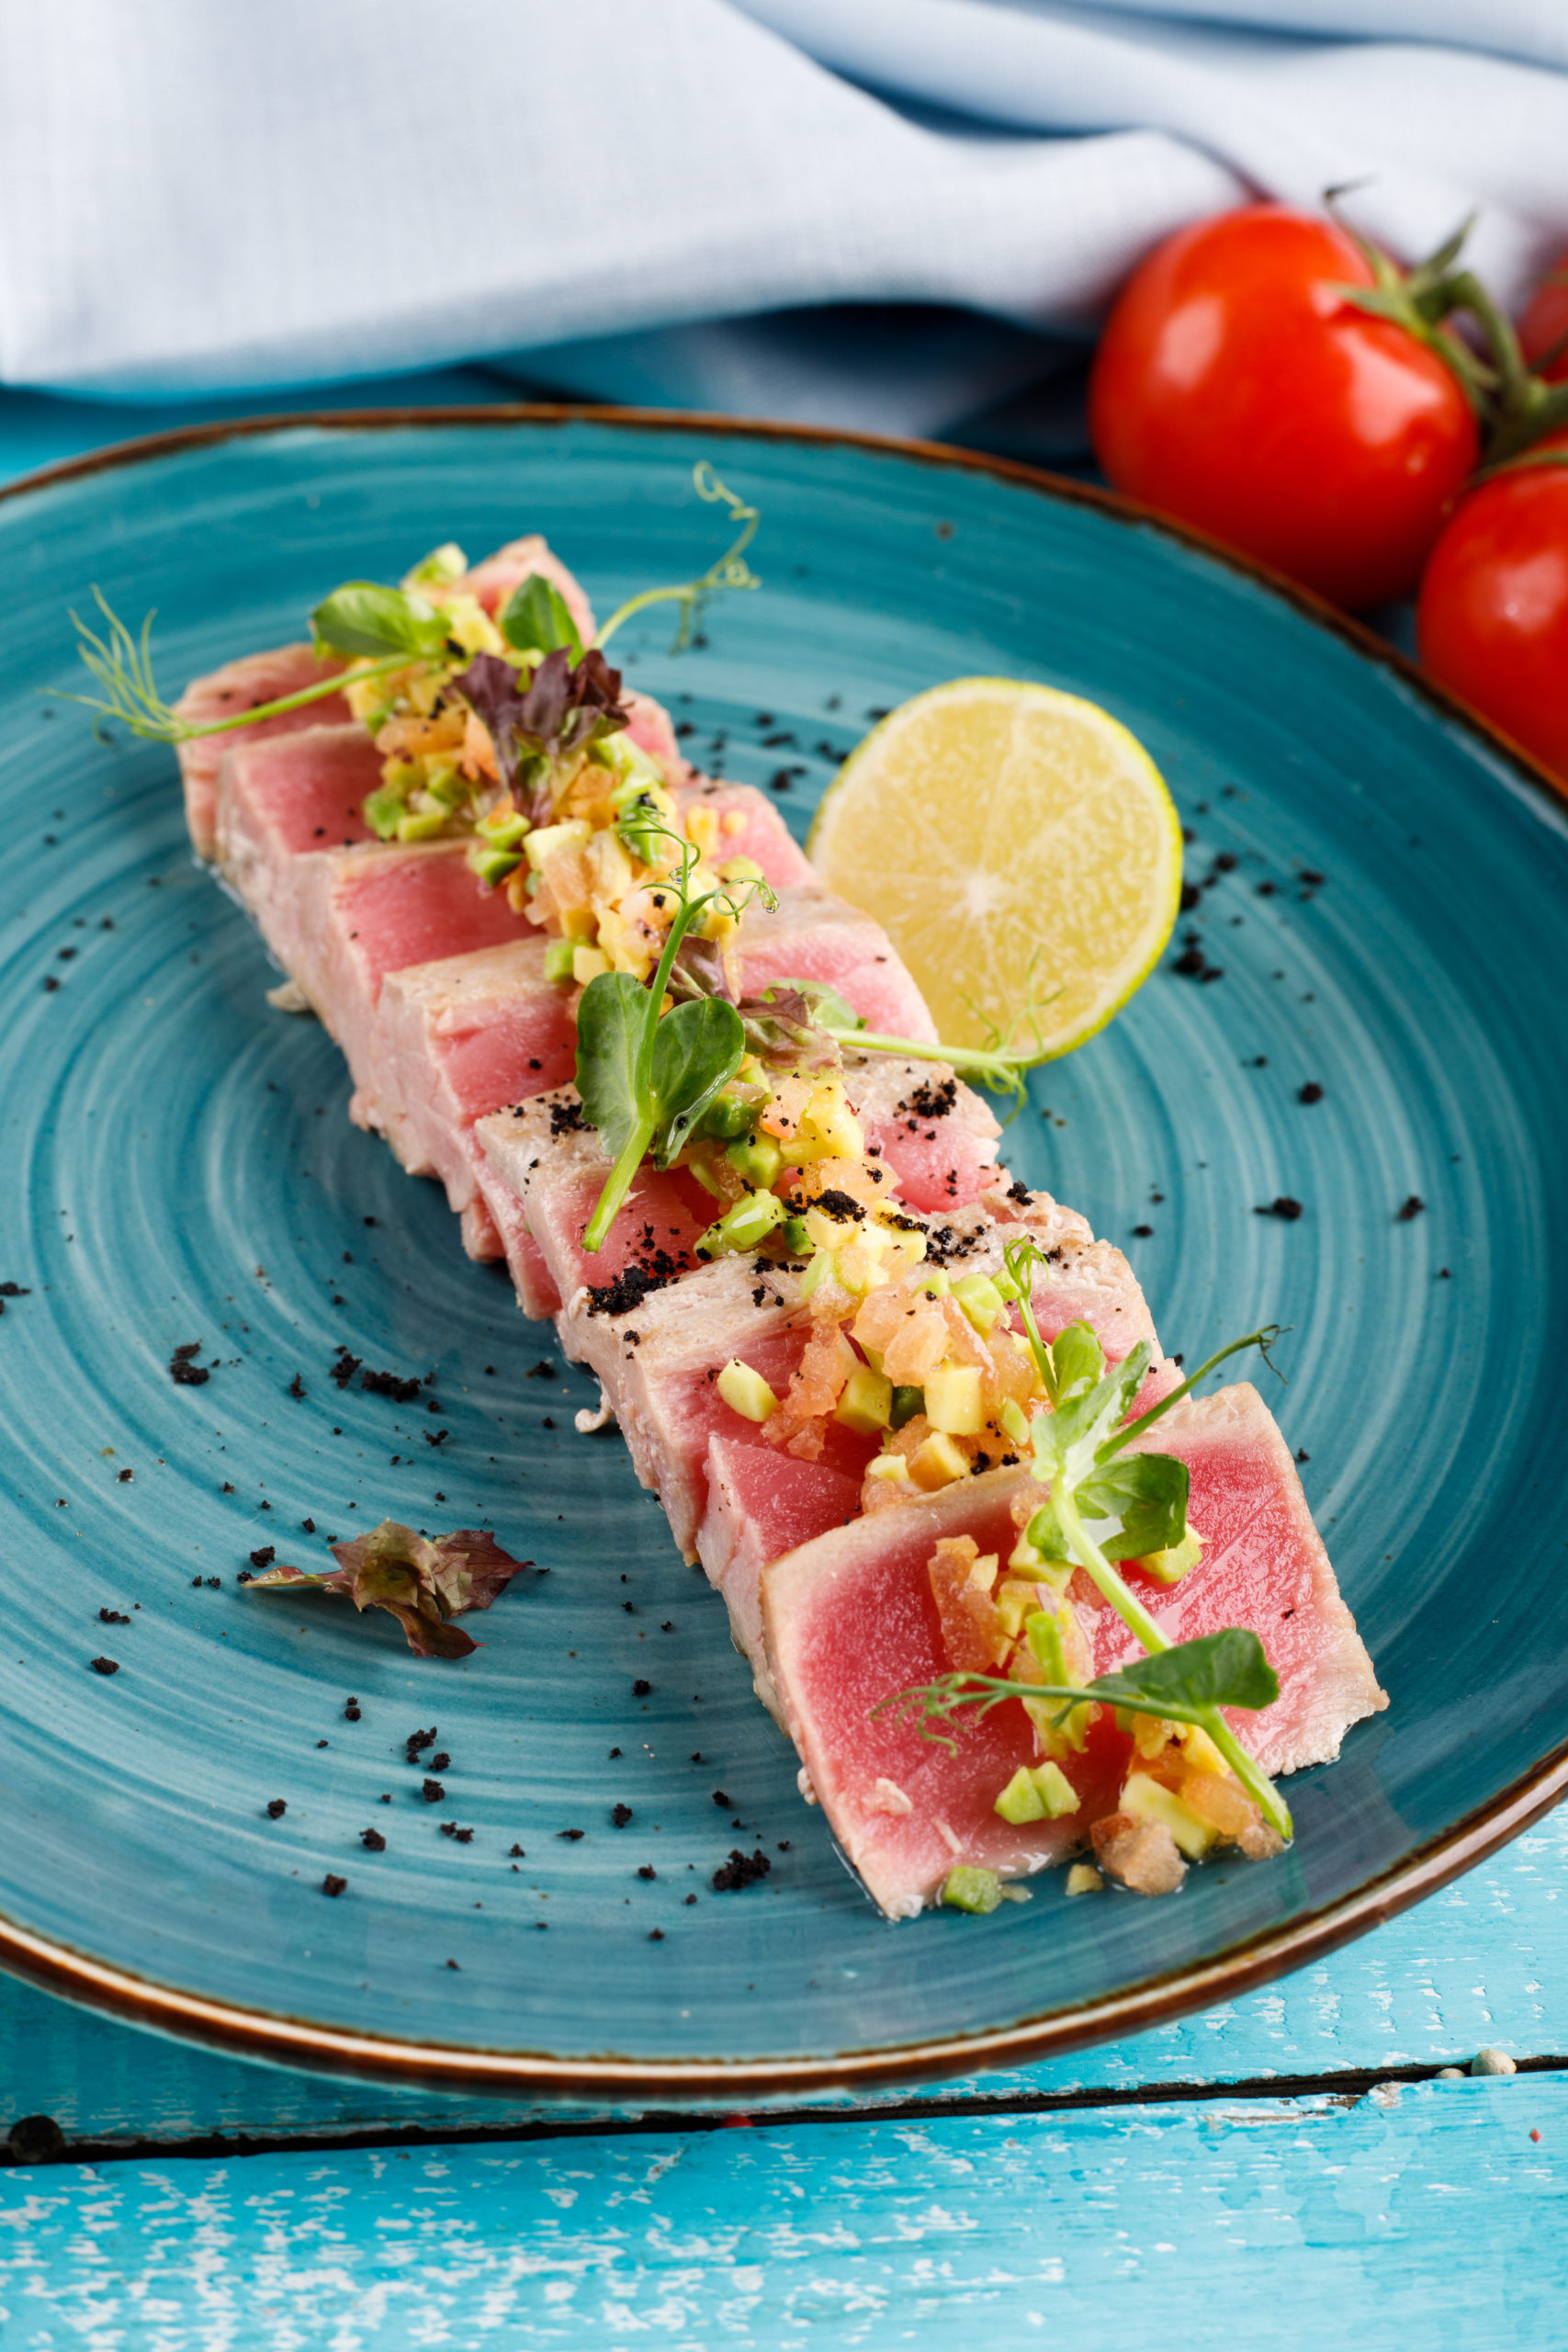 Pacific Albacore Tuna Loin, Product Of British Columbia